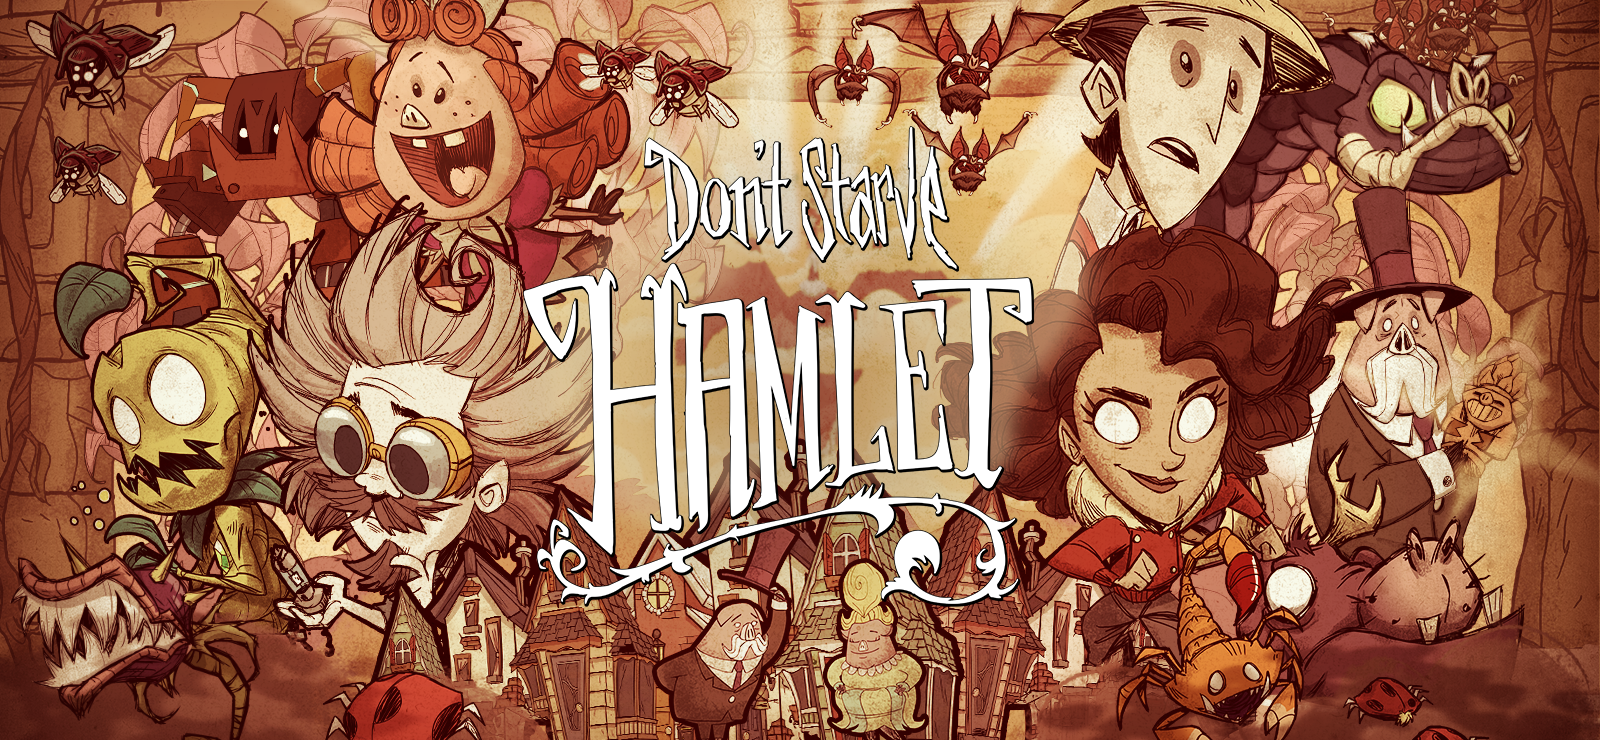 Don't Starve: Hamlet